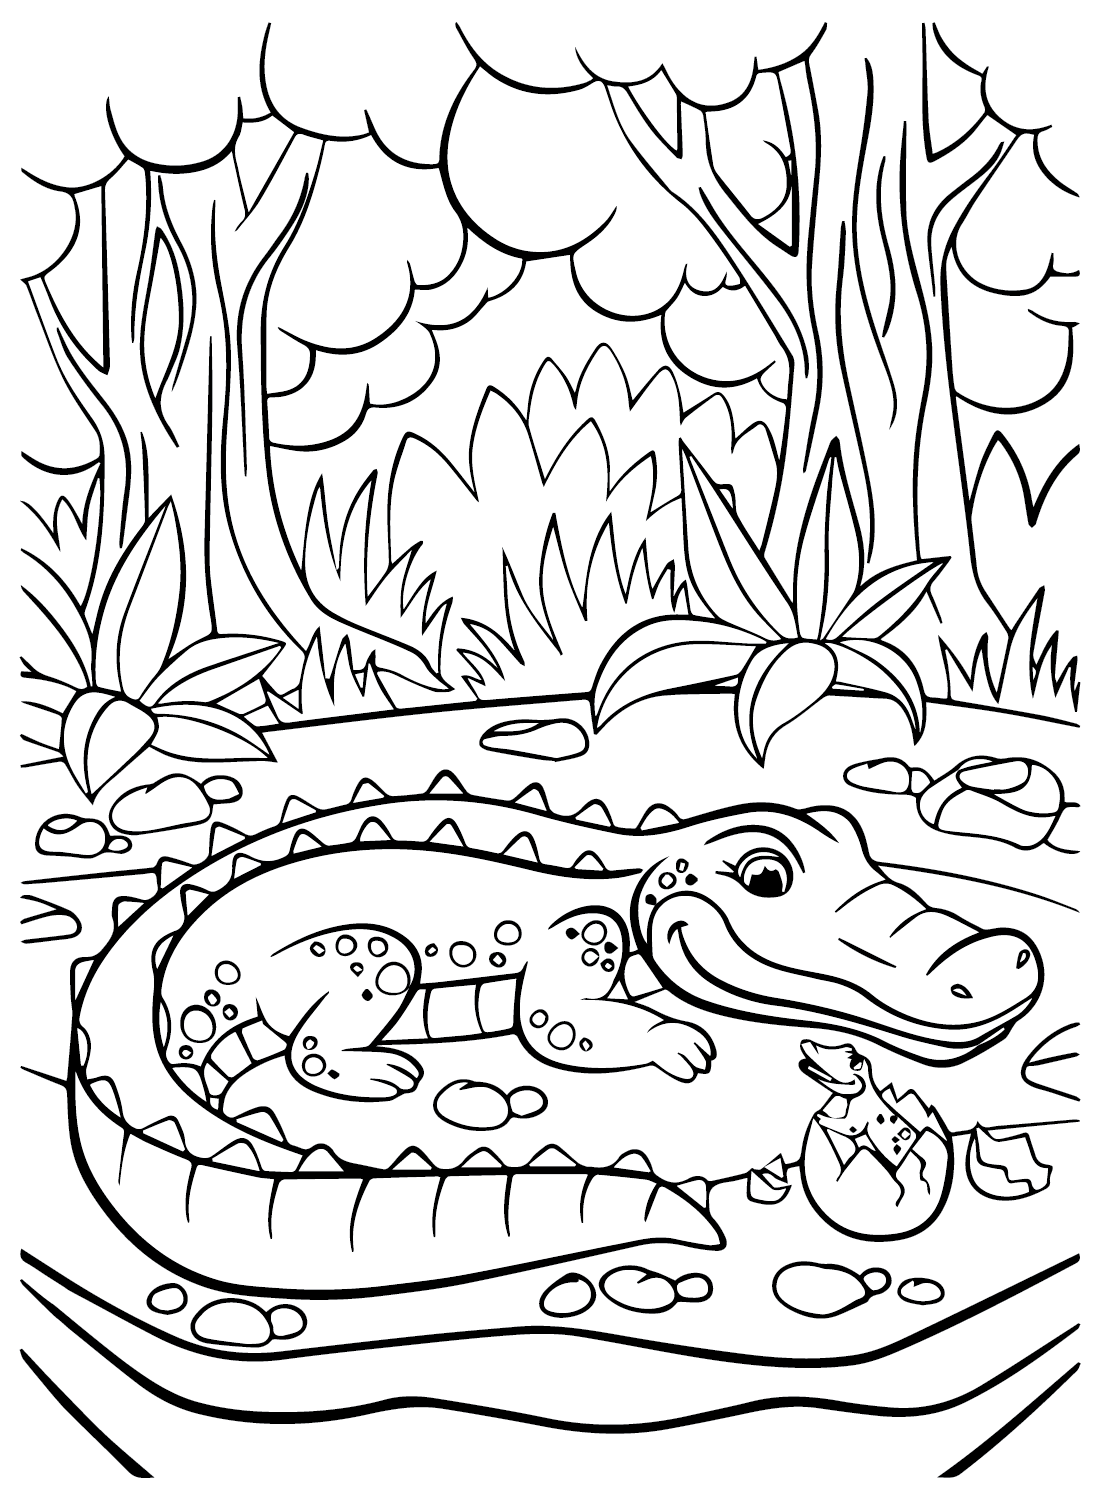 Krokodilafbeeldingen om in te kleuren van Krokodil